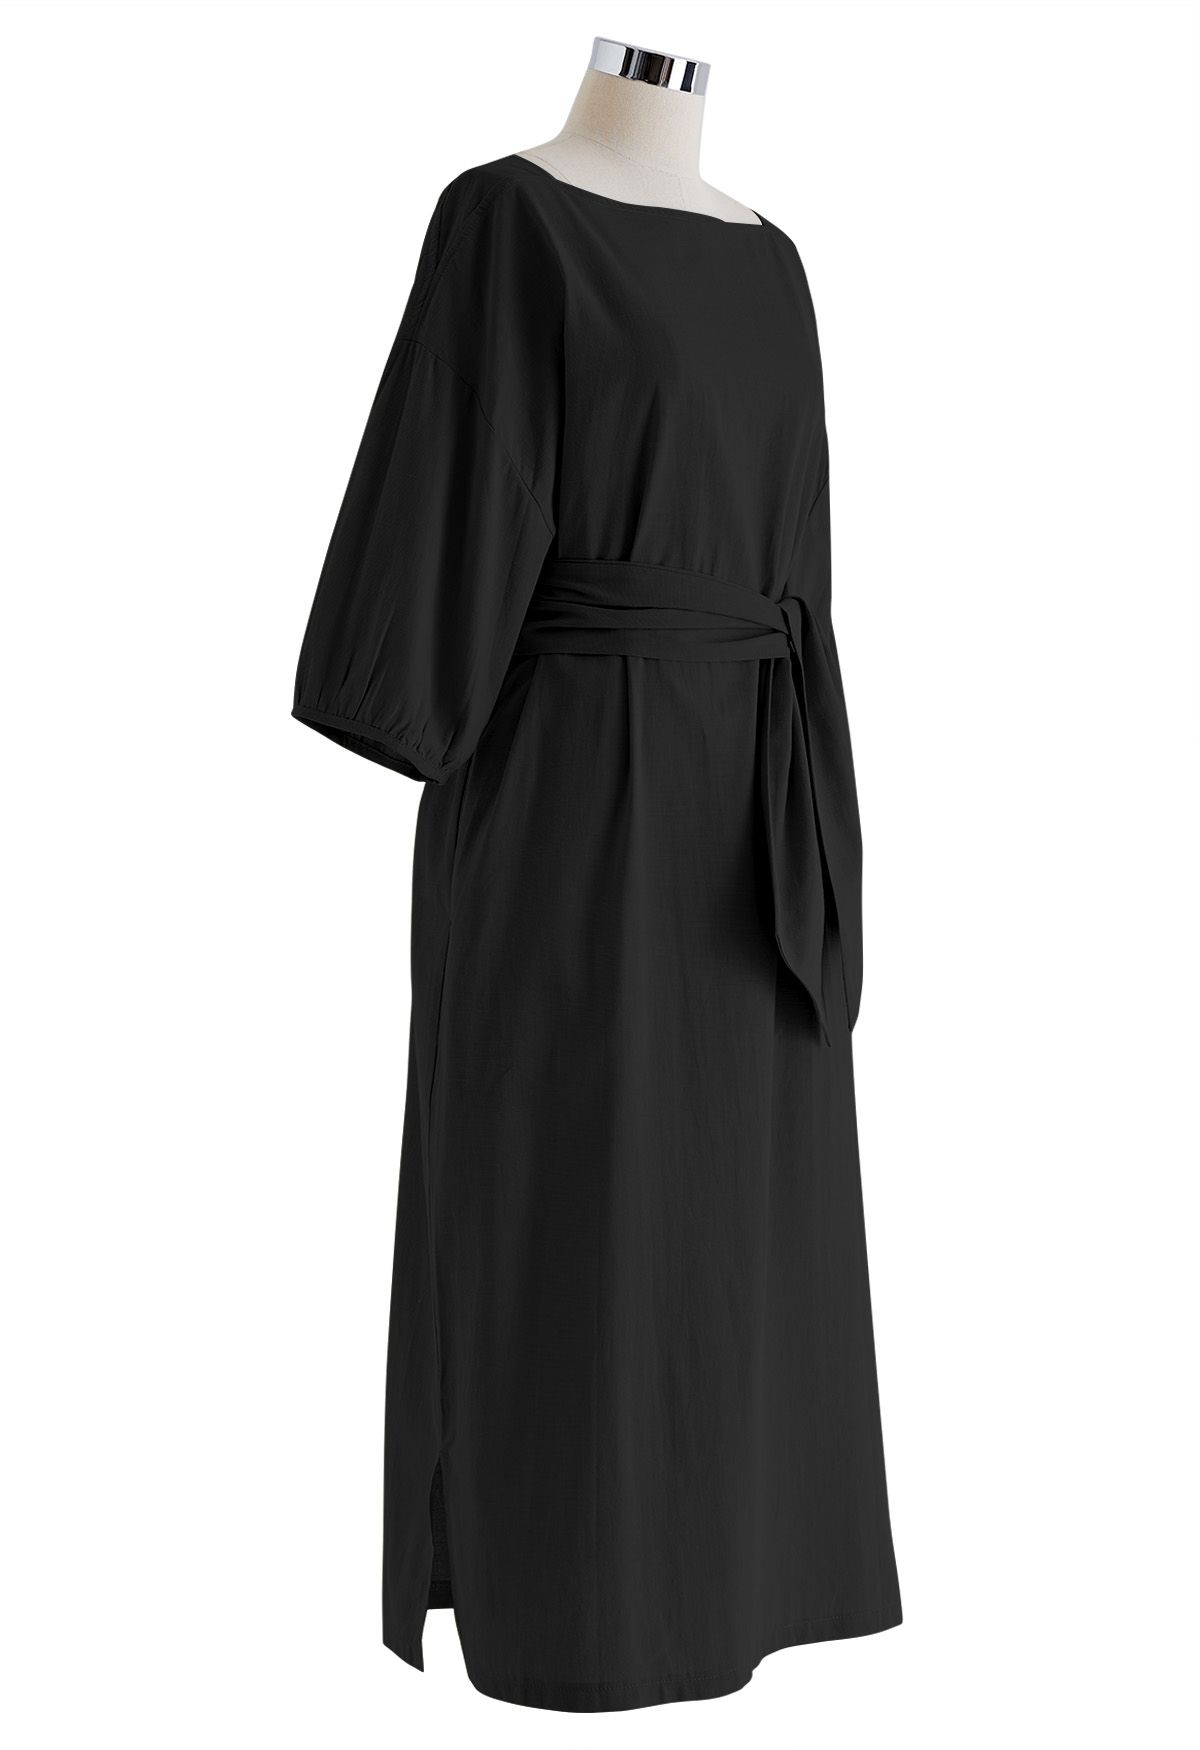 Tie-Waist Elbow Sleeves Linen Dress in Black